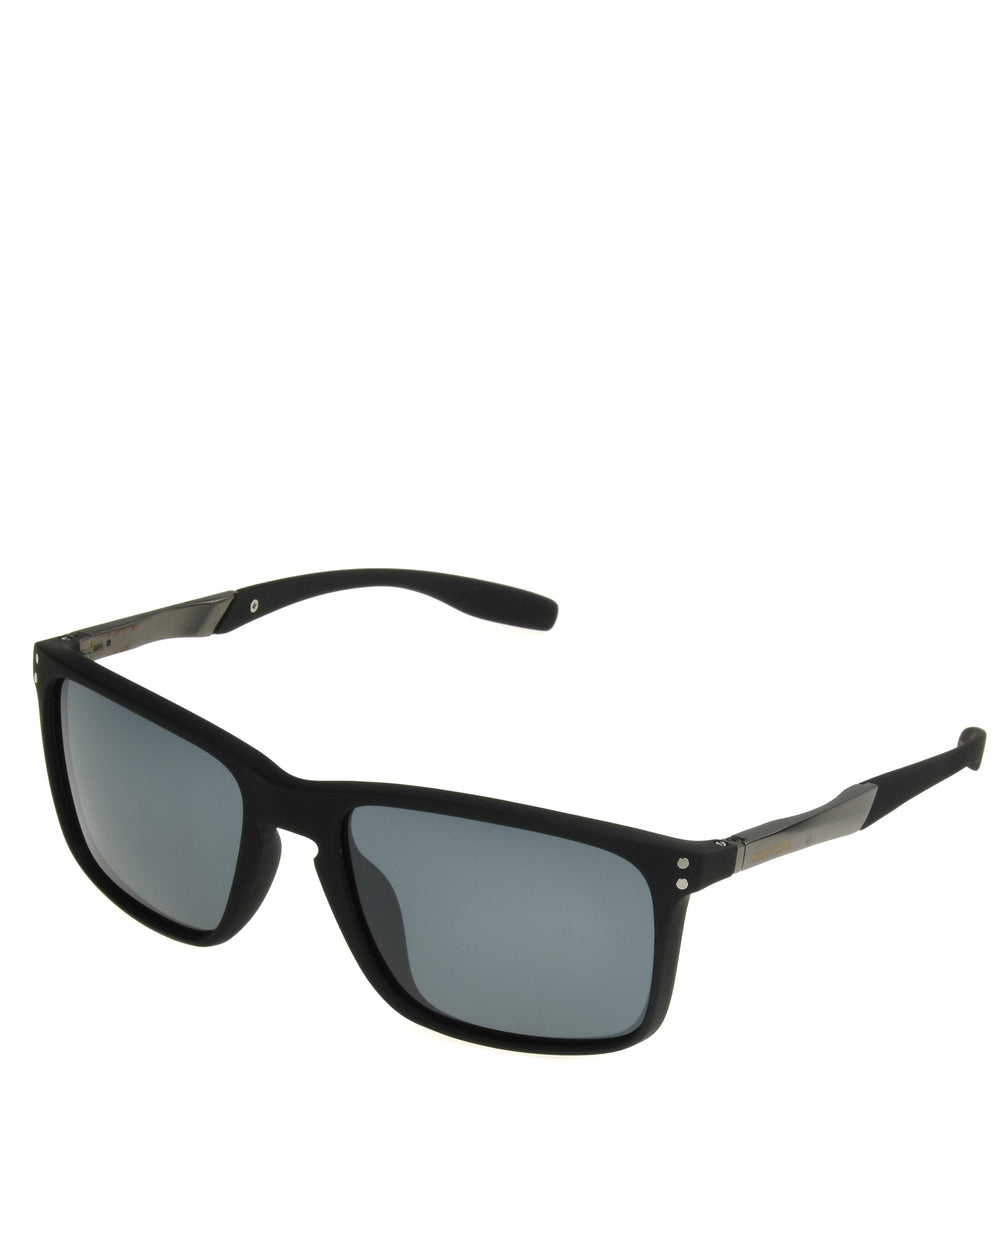 Men's BG1803 Polarized Sunglasses - Black